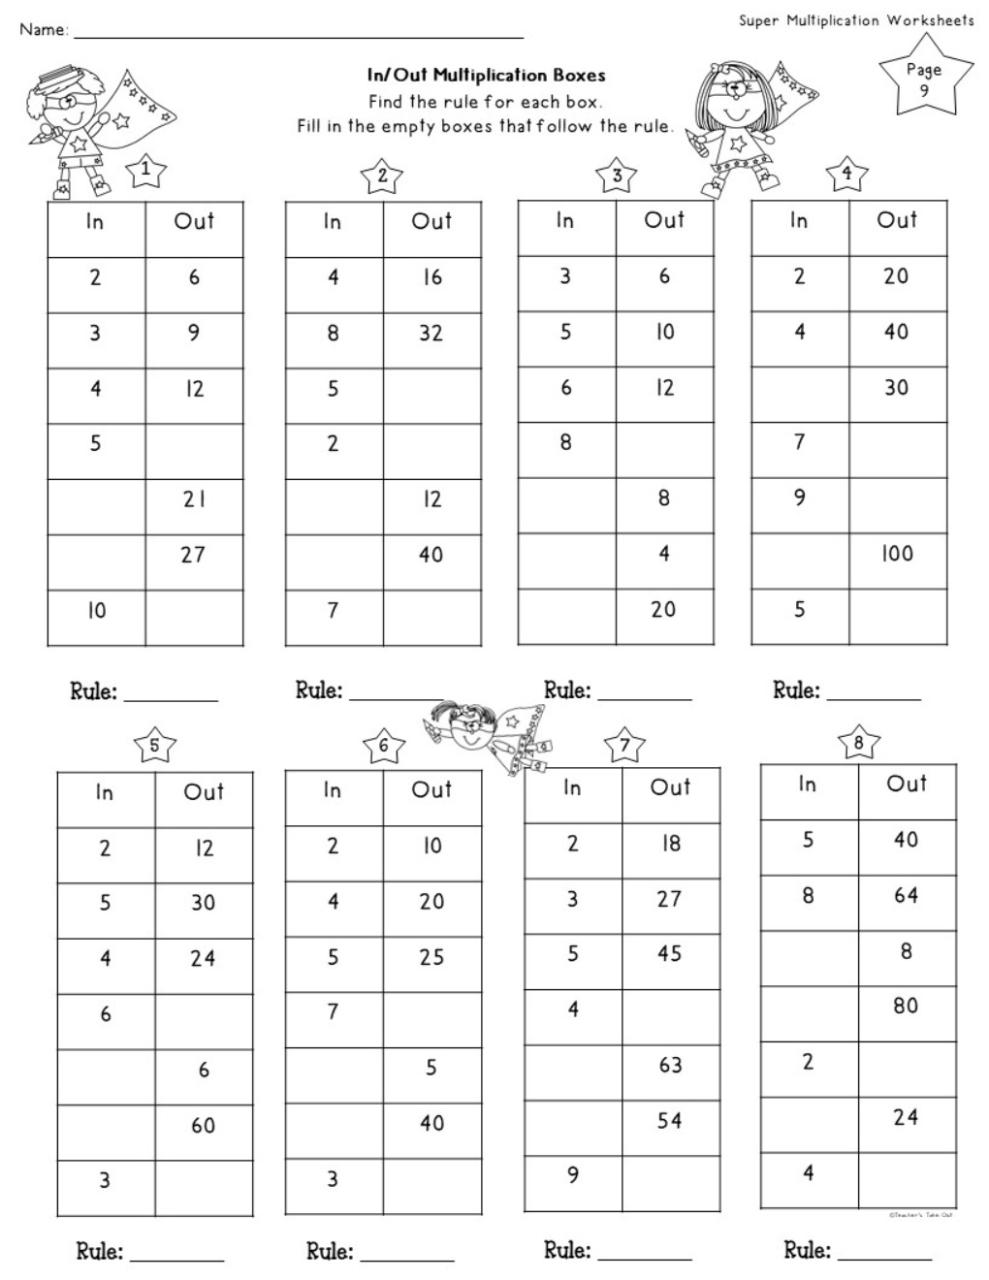 Super Multiplication Worksheets Teacher's TakeOut